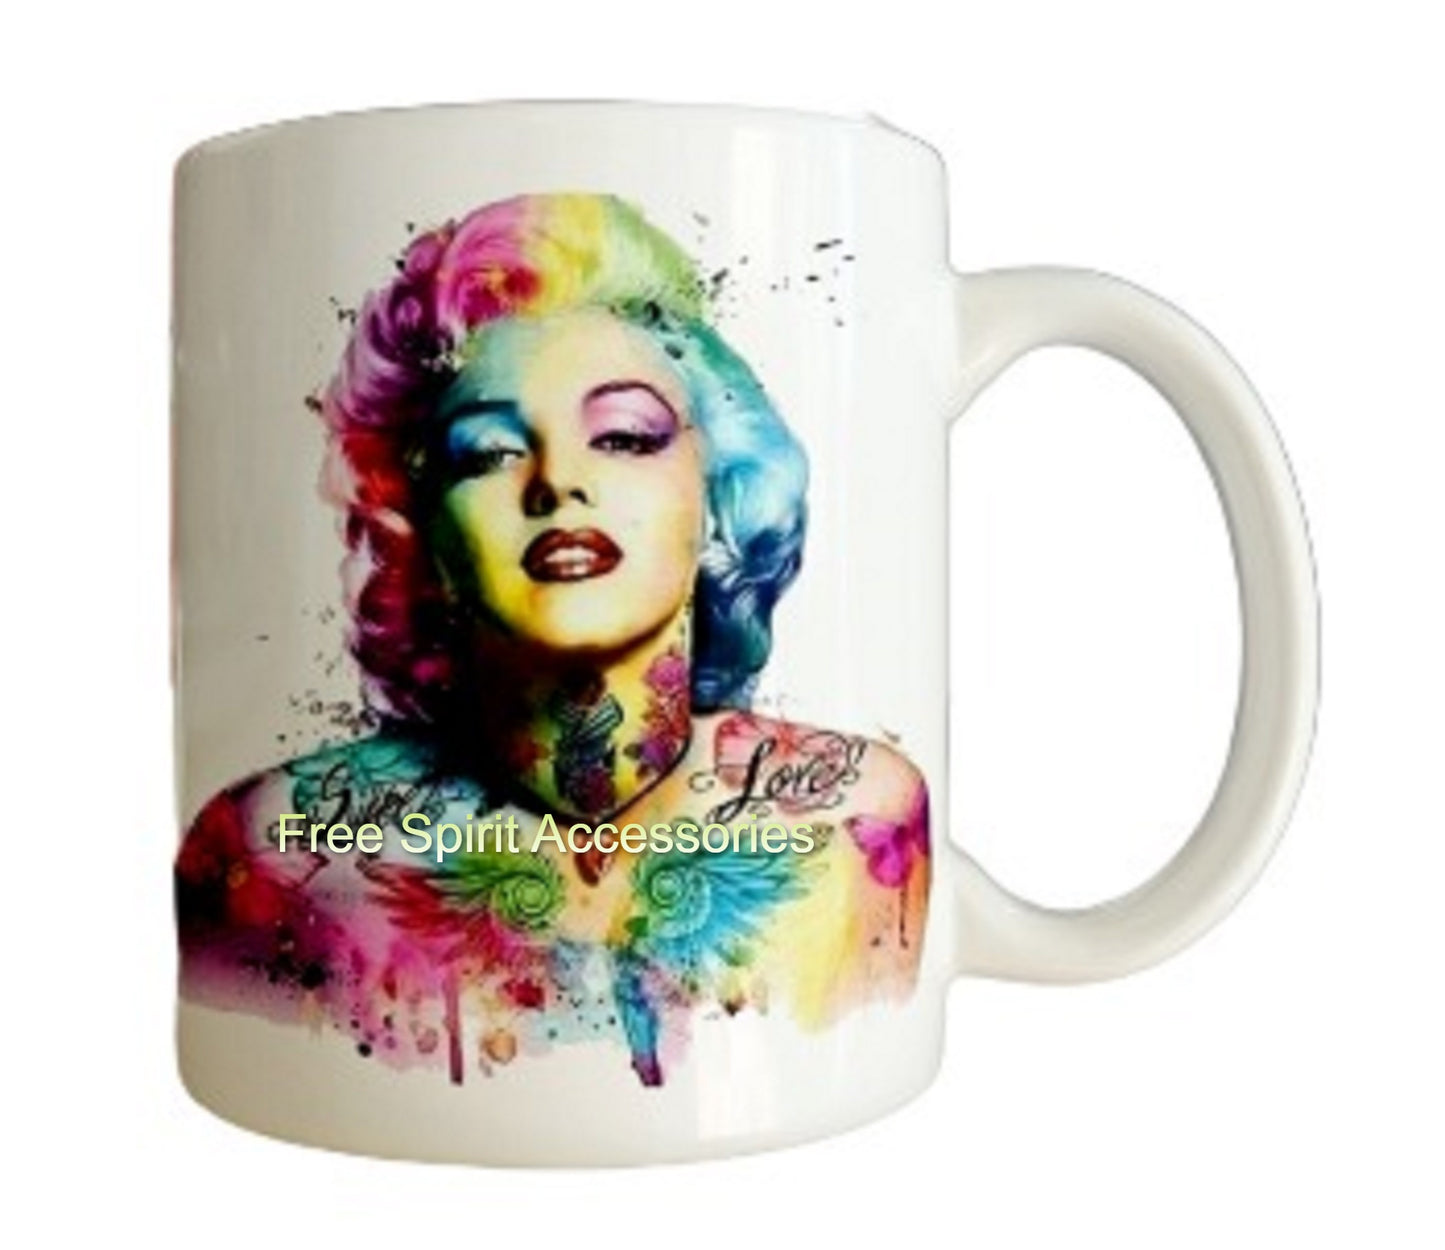  Tattooed Marilyn Monroe Pop Art Mug by Free Spirit Accessories sold by Free Spirit Accessories